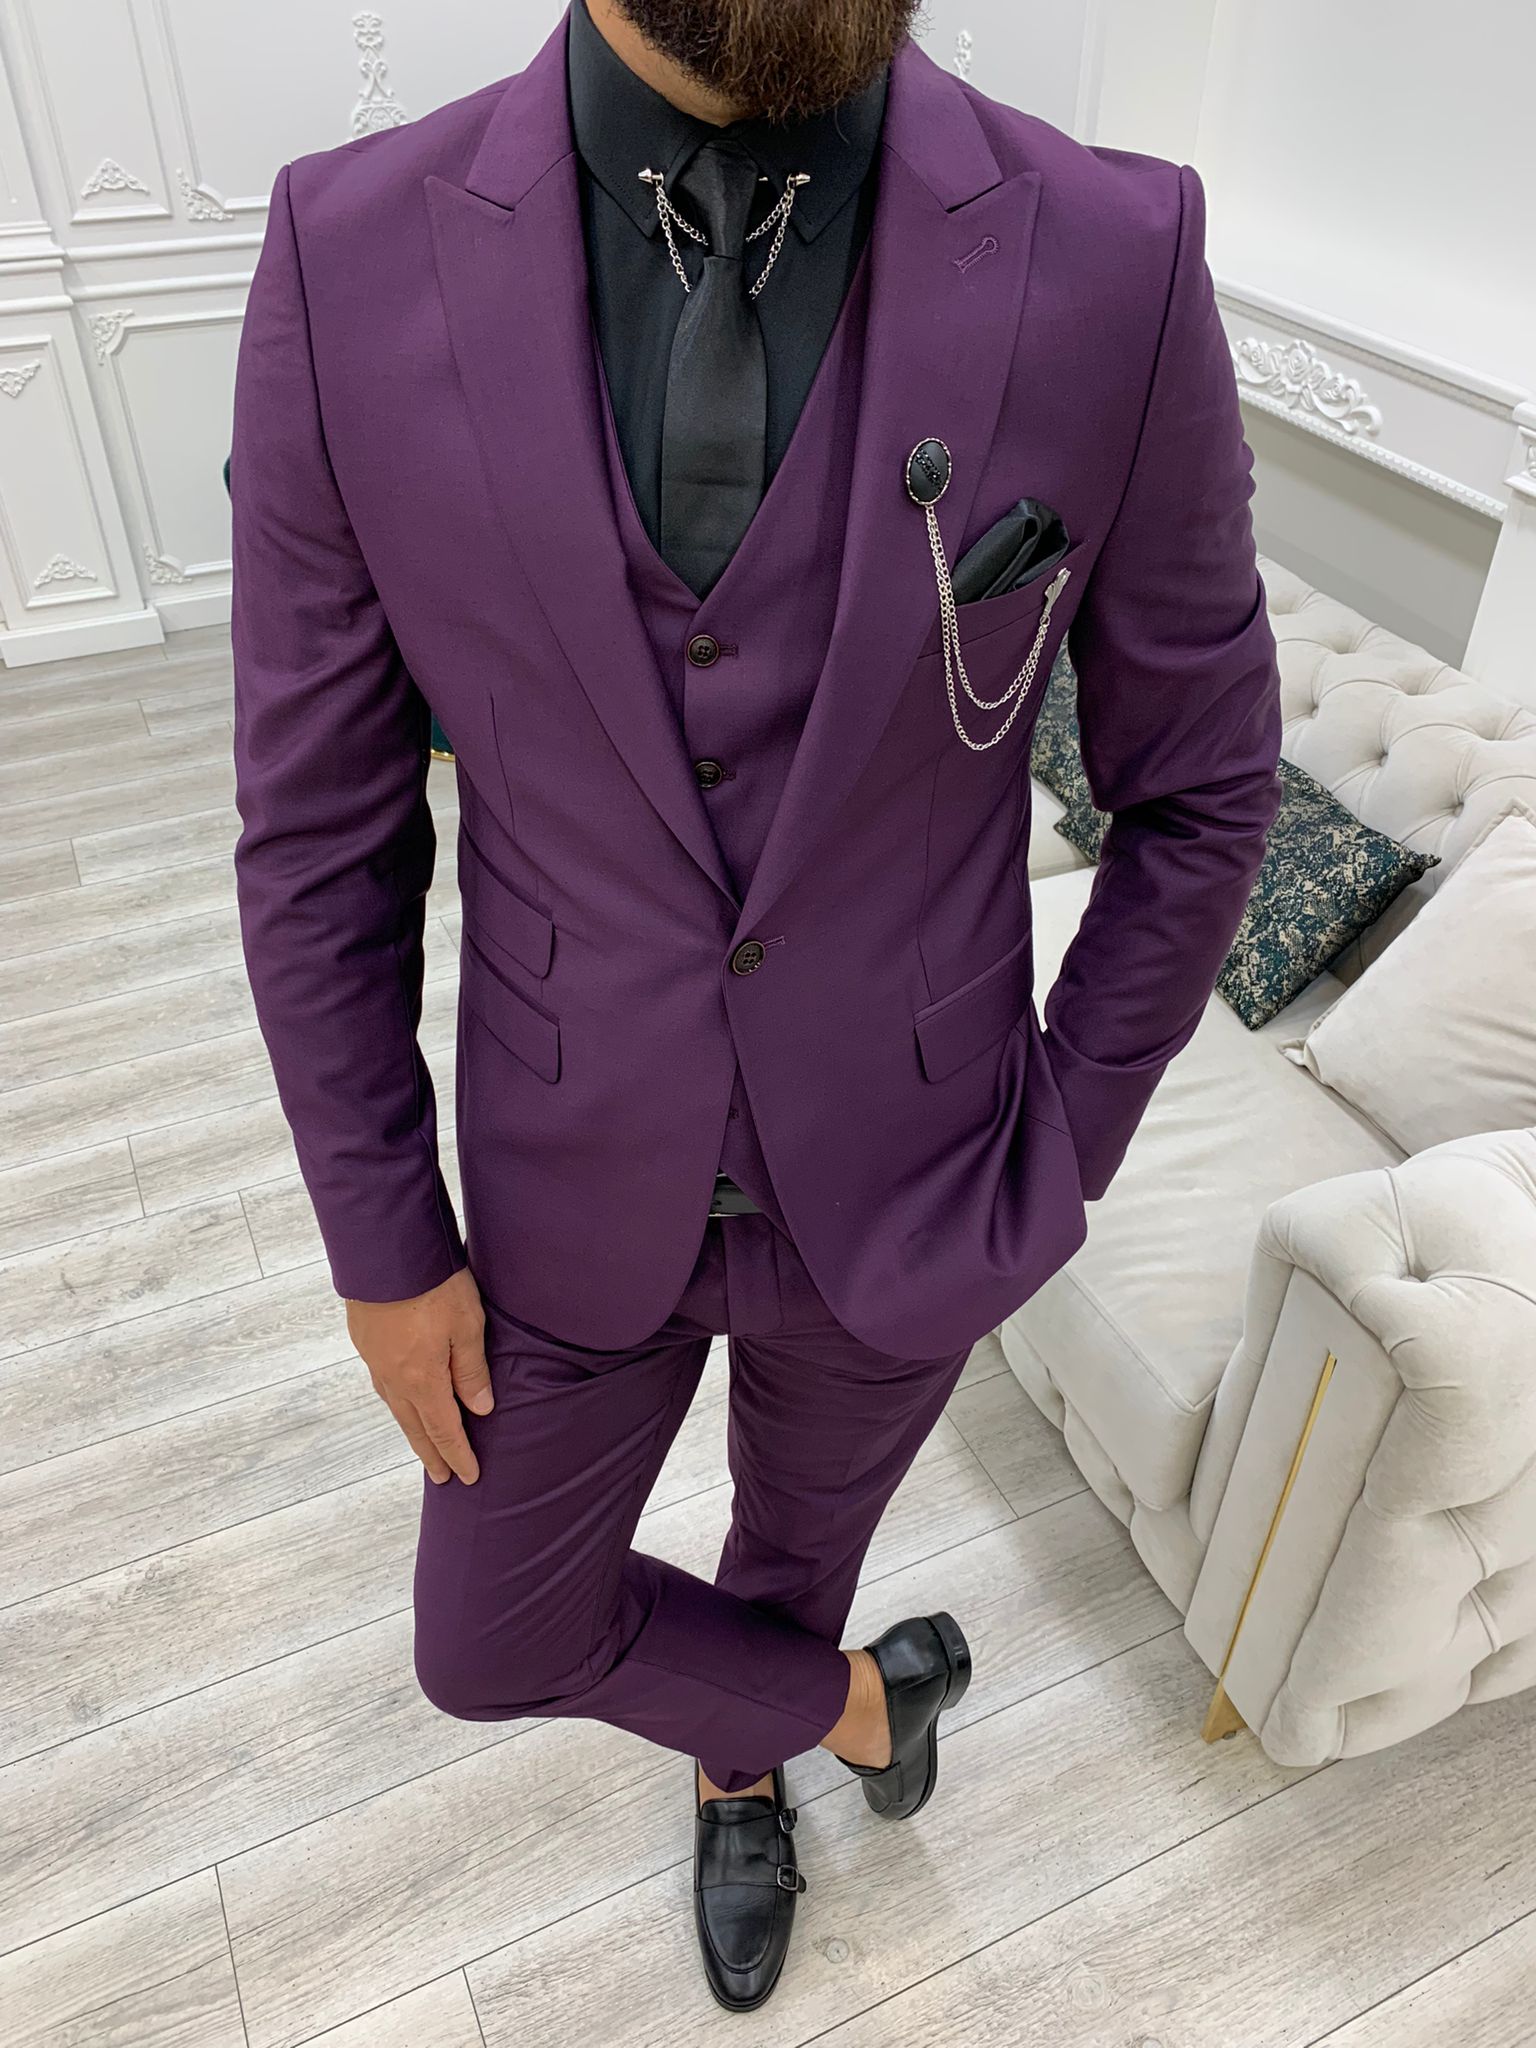 Rio Grande Purple Suit – HolloMen